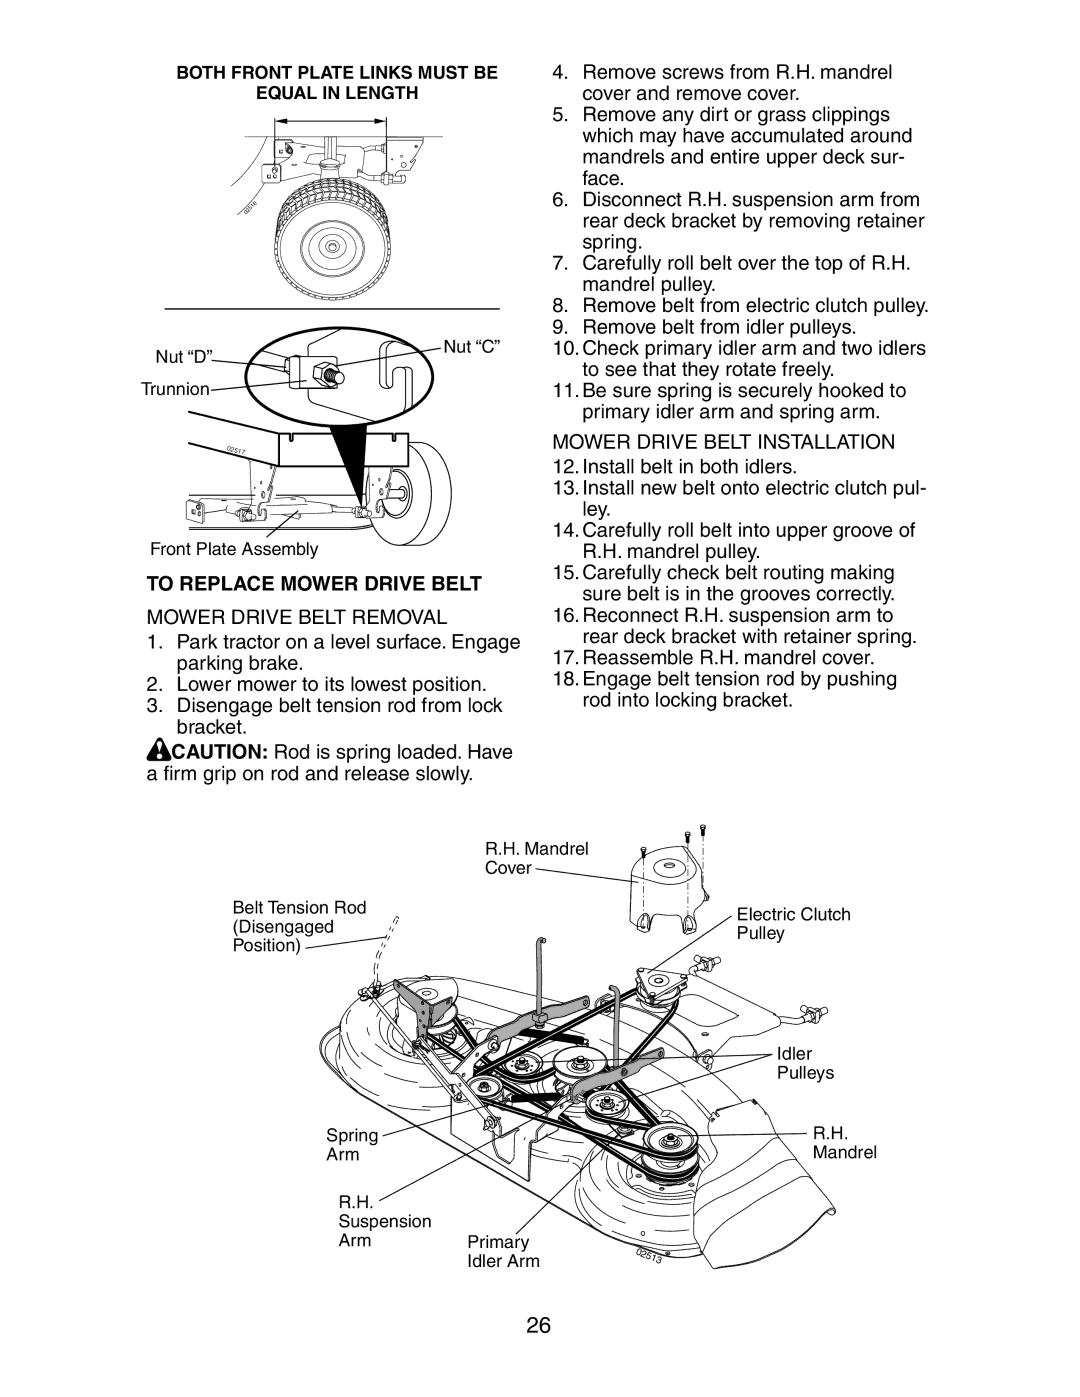 Poulan 191697 manual To Replace Mower Drive Belt, Mower Drive Belt Removal, Mower Drive Belt Installation 